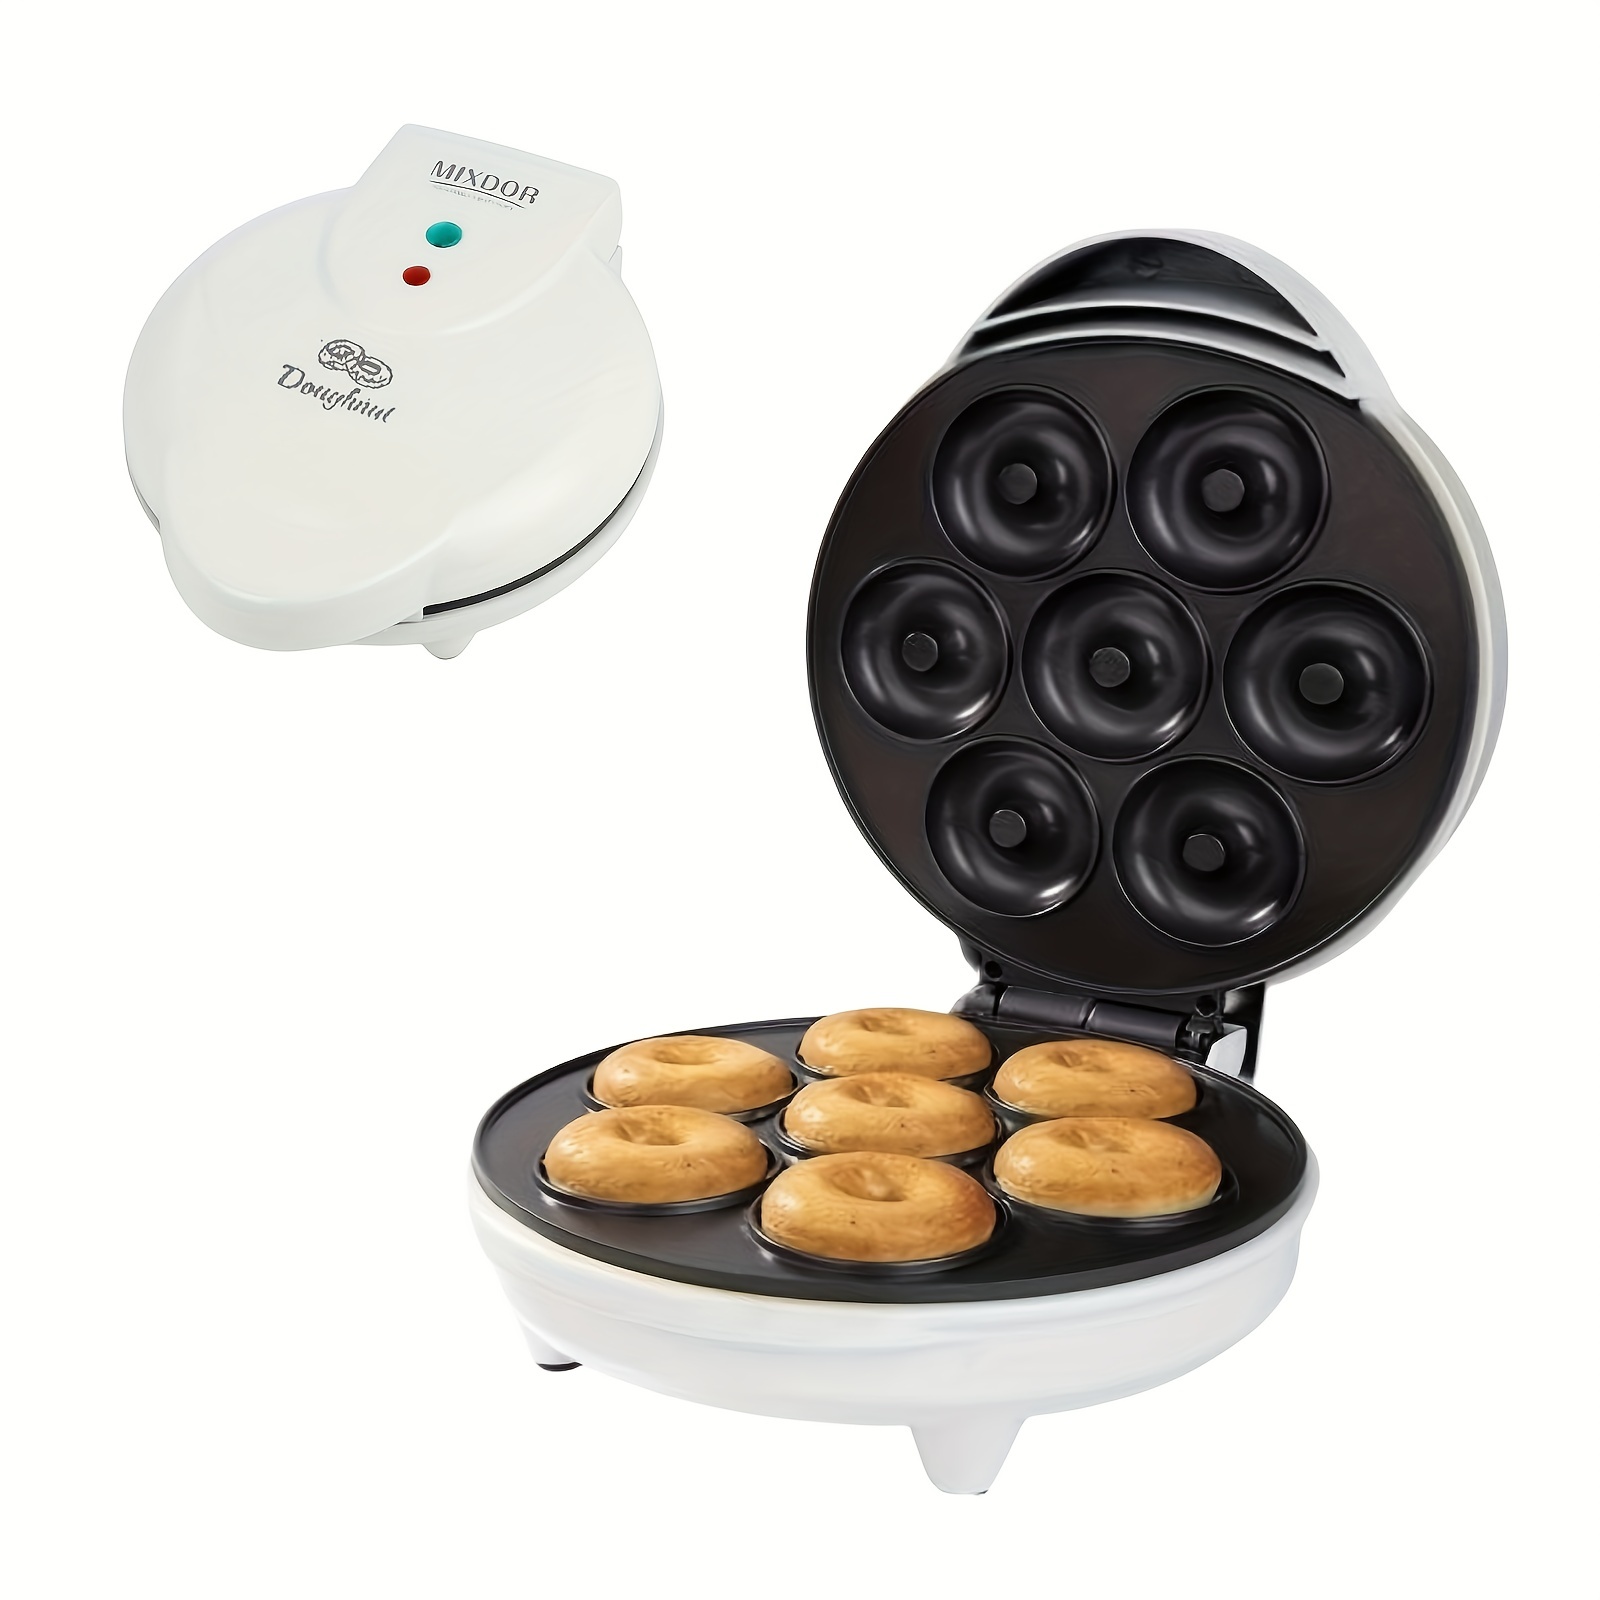  Mini Donut Maker 7 Holes, Electric Donut Press Machine, Mini  Donut Maker Machine, Non-Stick & Double-sided Heating, for Kid-Friendly  Breakfast Desserts: Home & Kitchen